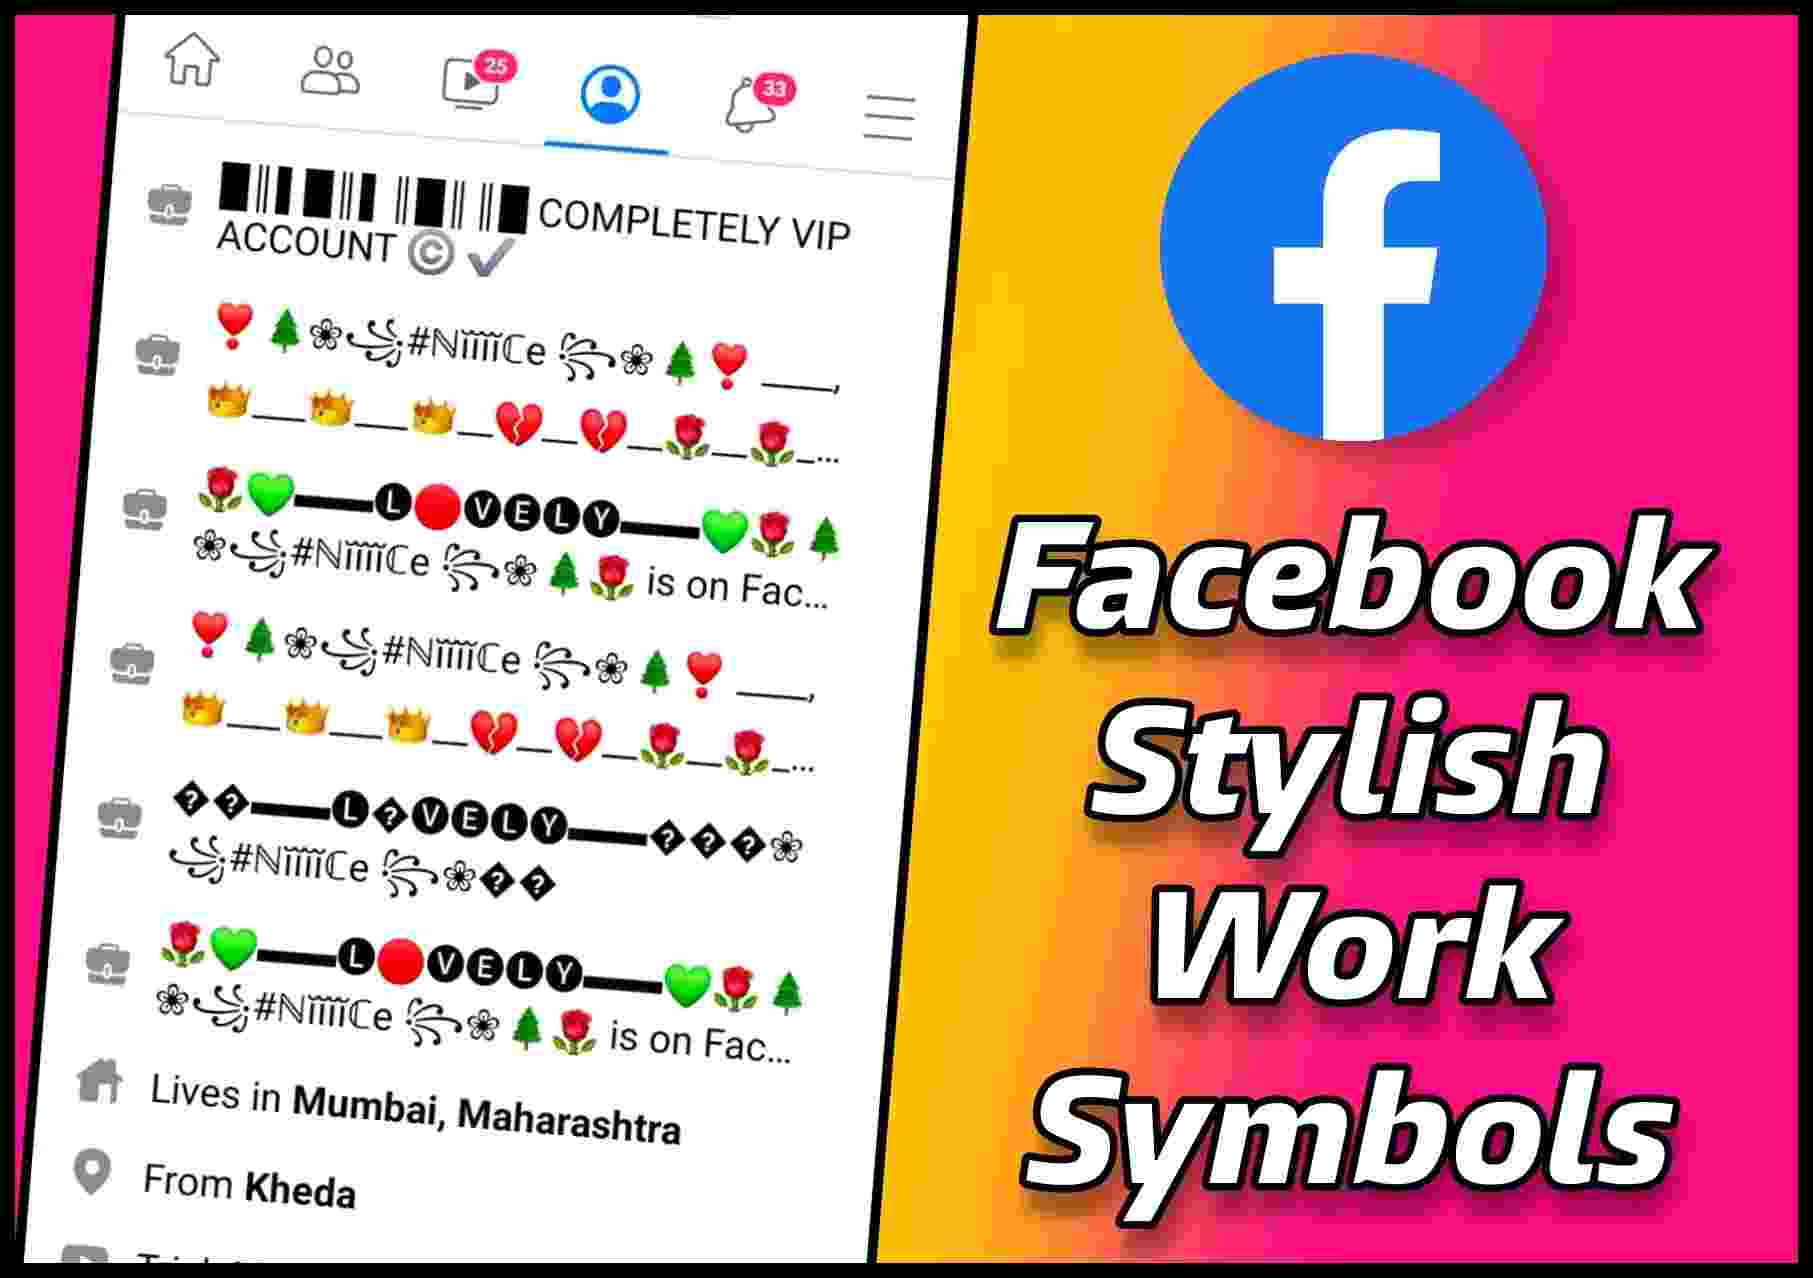 Facebook Stylish Work Symbols | Facebook Vip Account Stylish Work Symbols Copy And Paste 2022